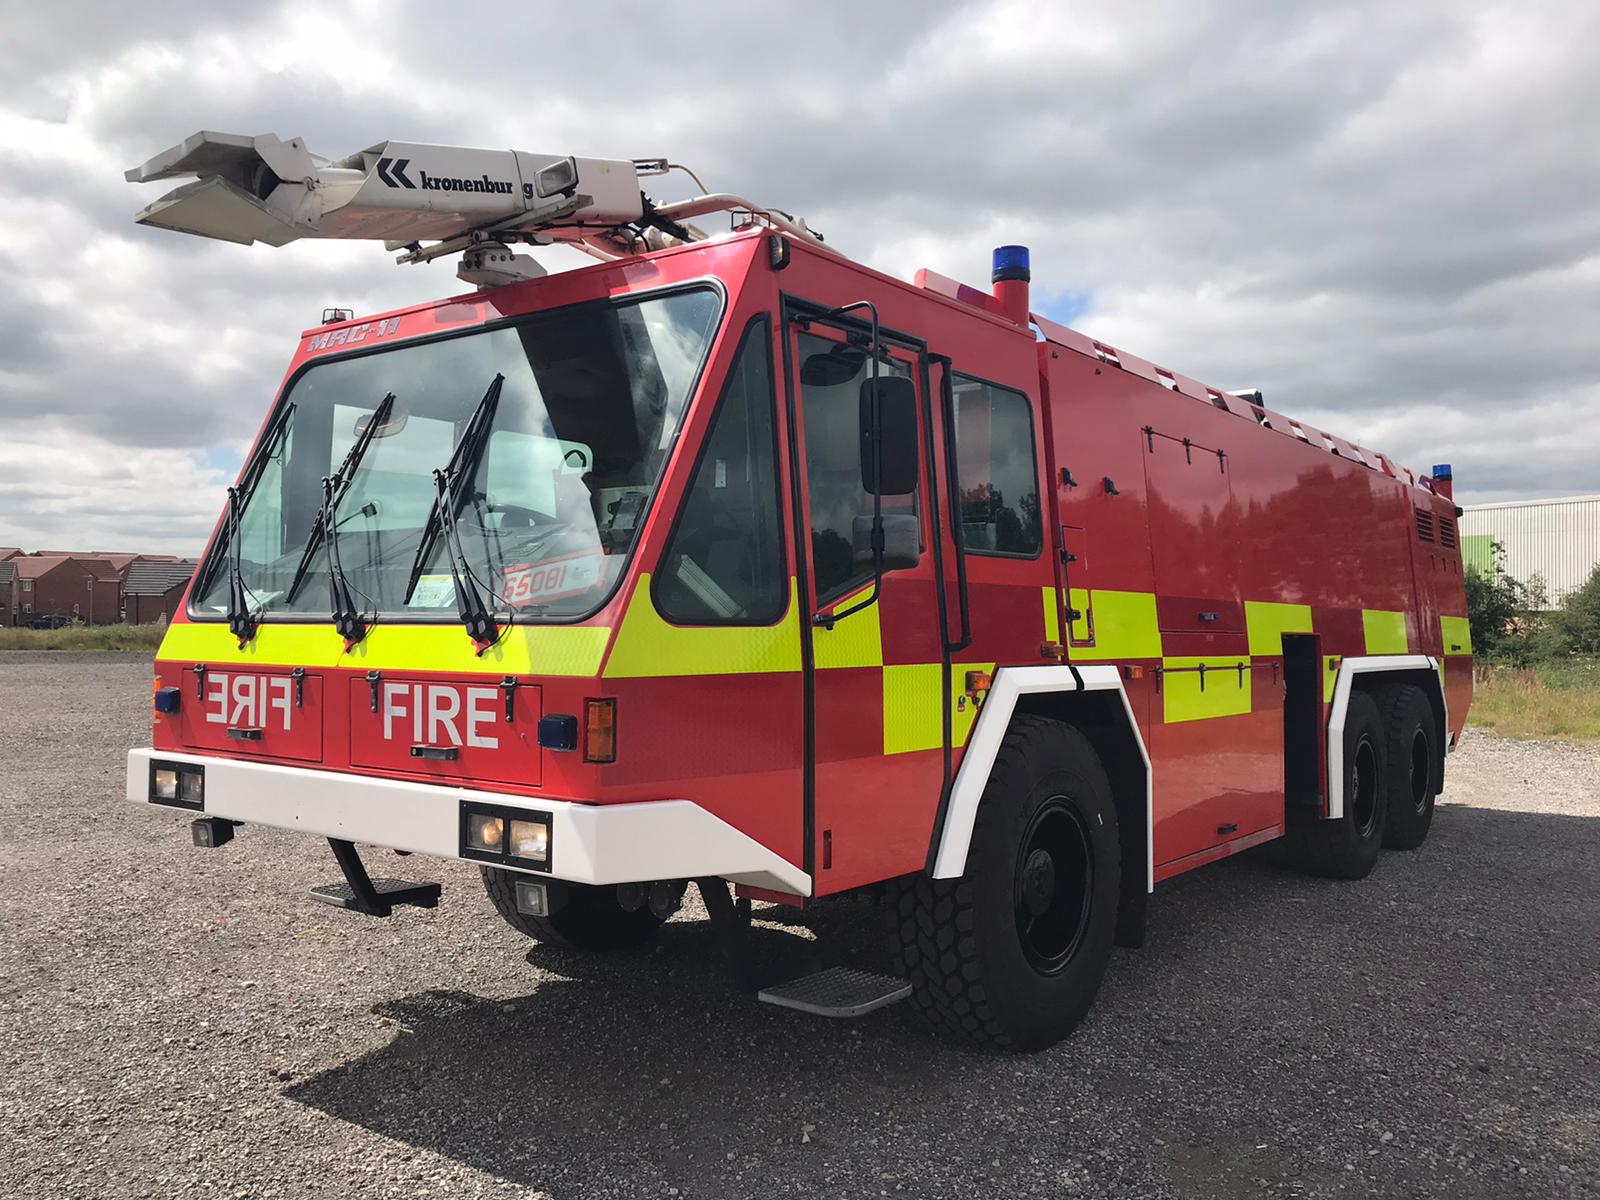 KRONENBURG MAC 11 6X6 Airport Fire Engine - ex military vehicles for sale, mod surplus